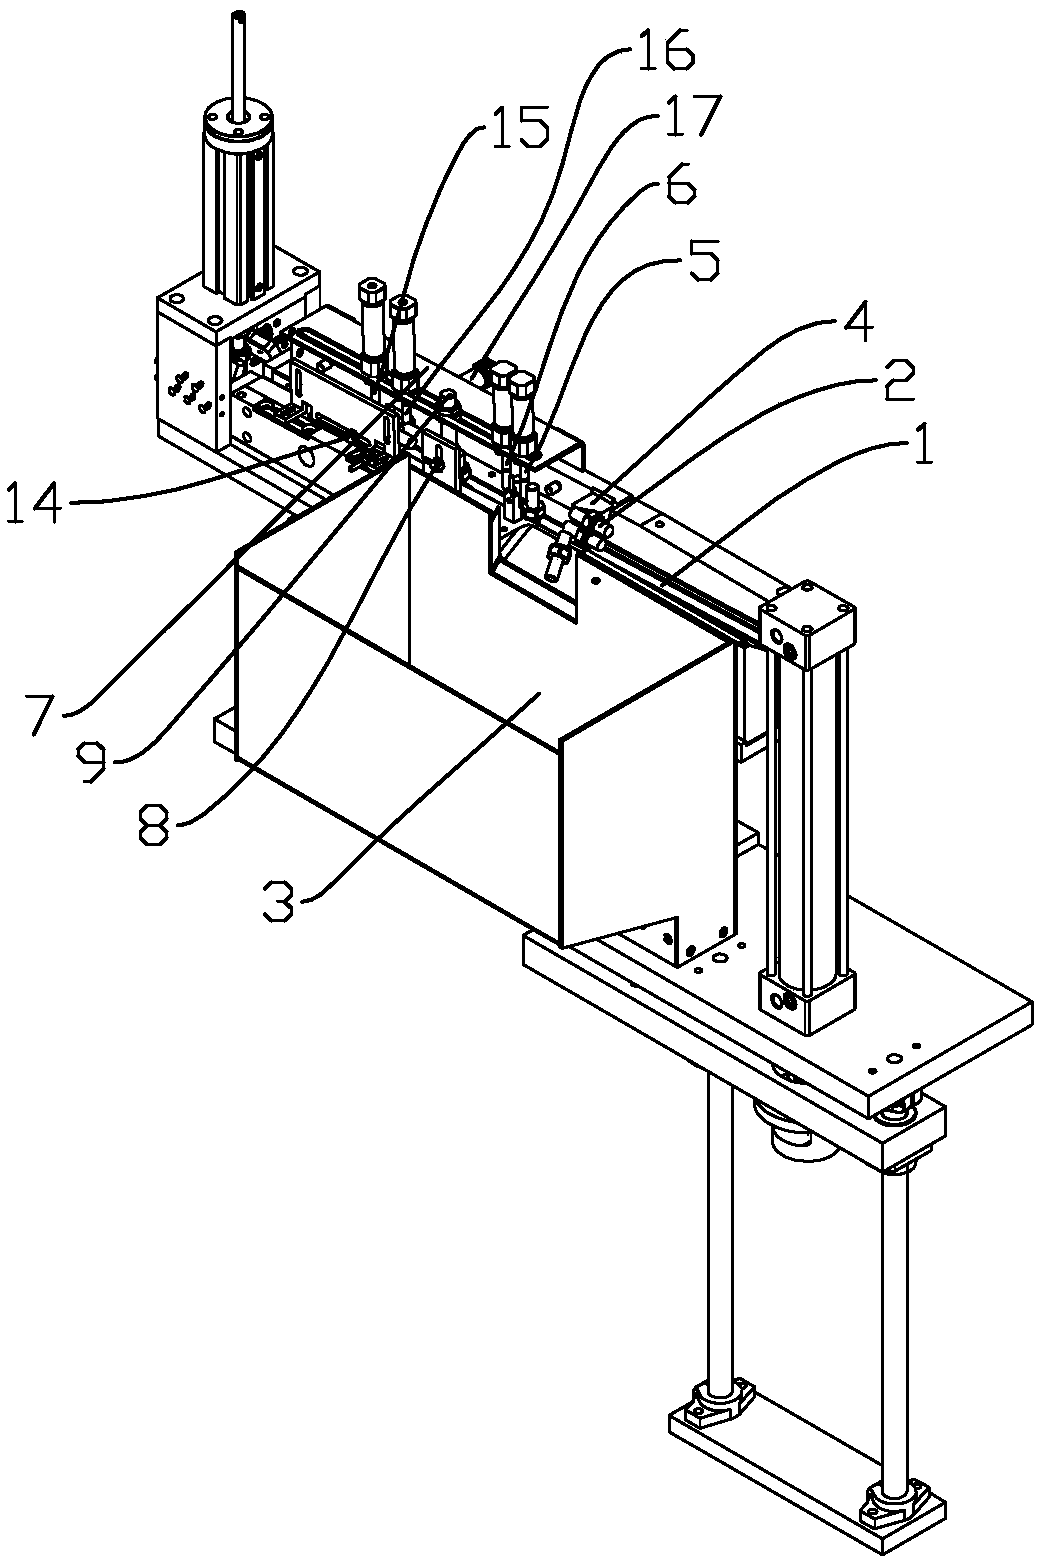 A rivet direct vibration feeding mechanism